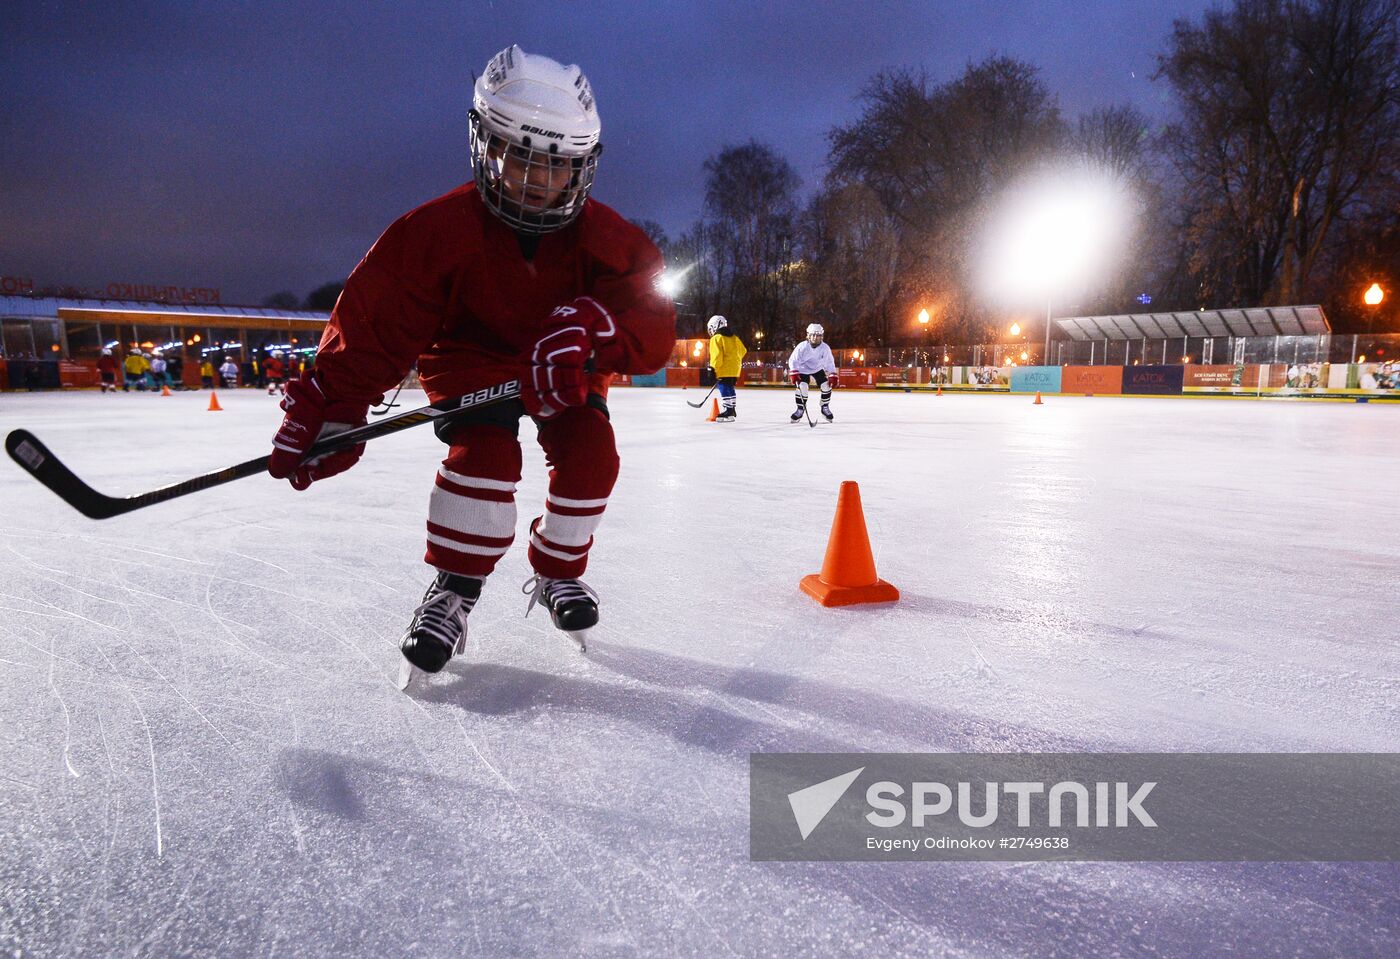 Free ice hockey school for children opens in Gorky Park